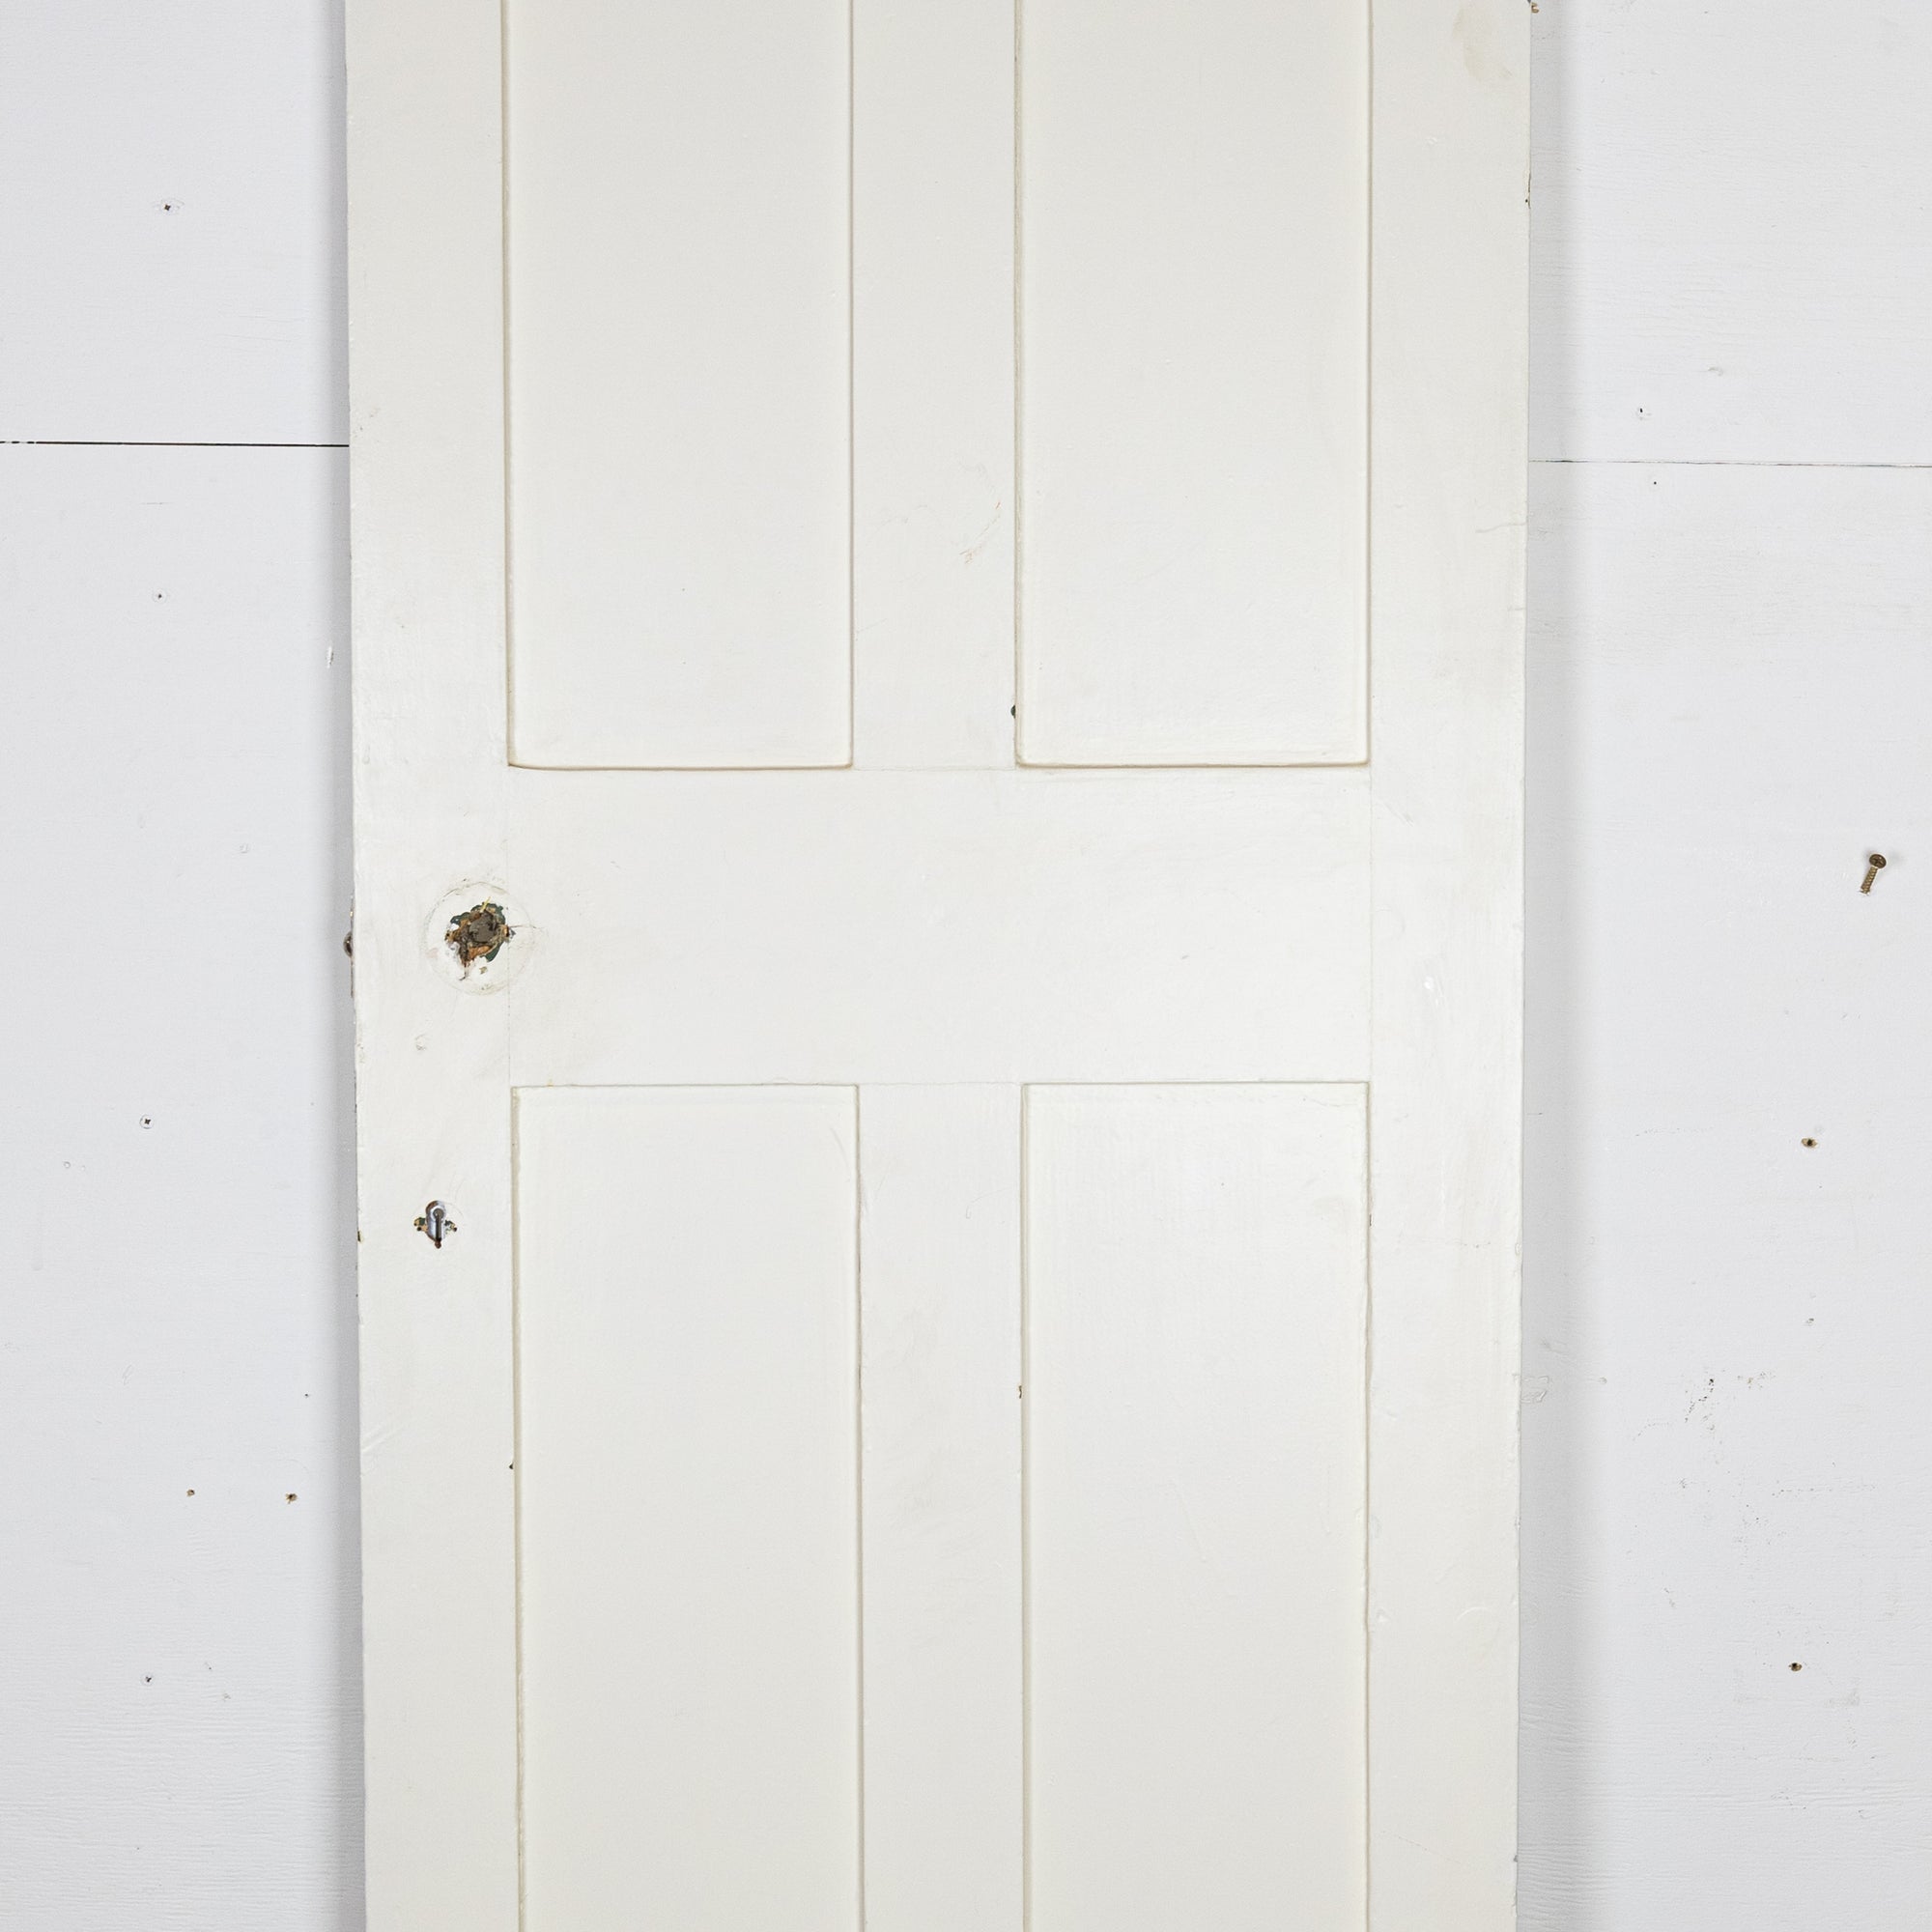 Antique Victorian 4 Panel Door - 177 x 65cm | The Architectural Forum